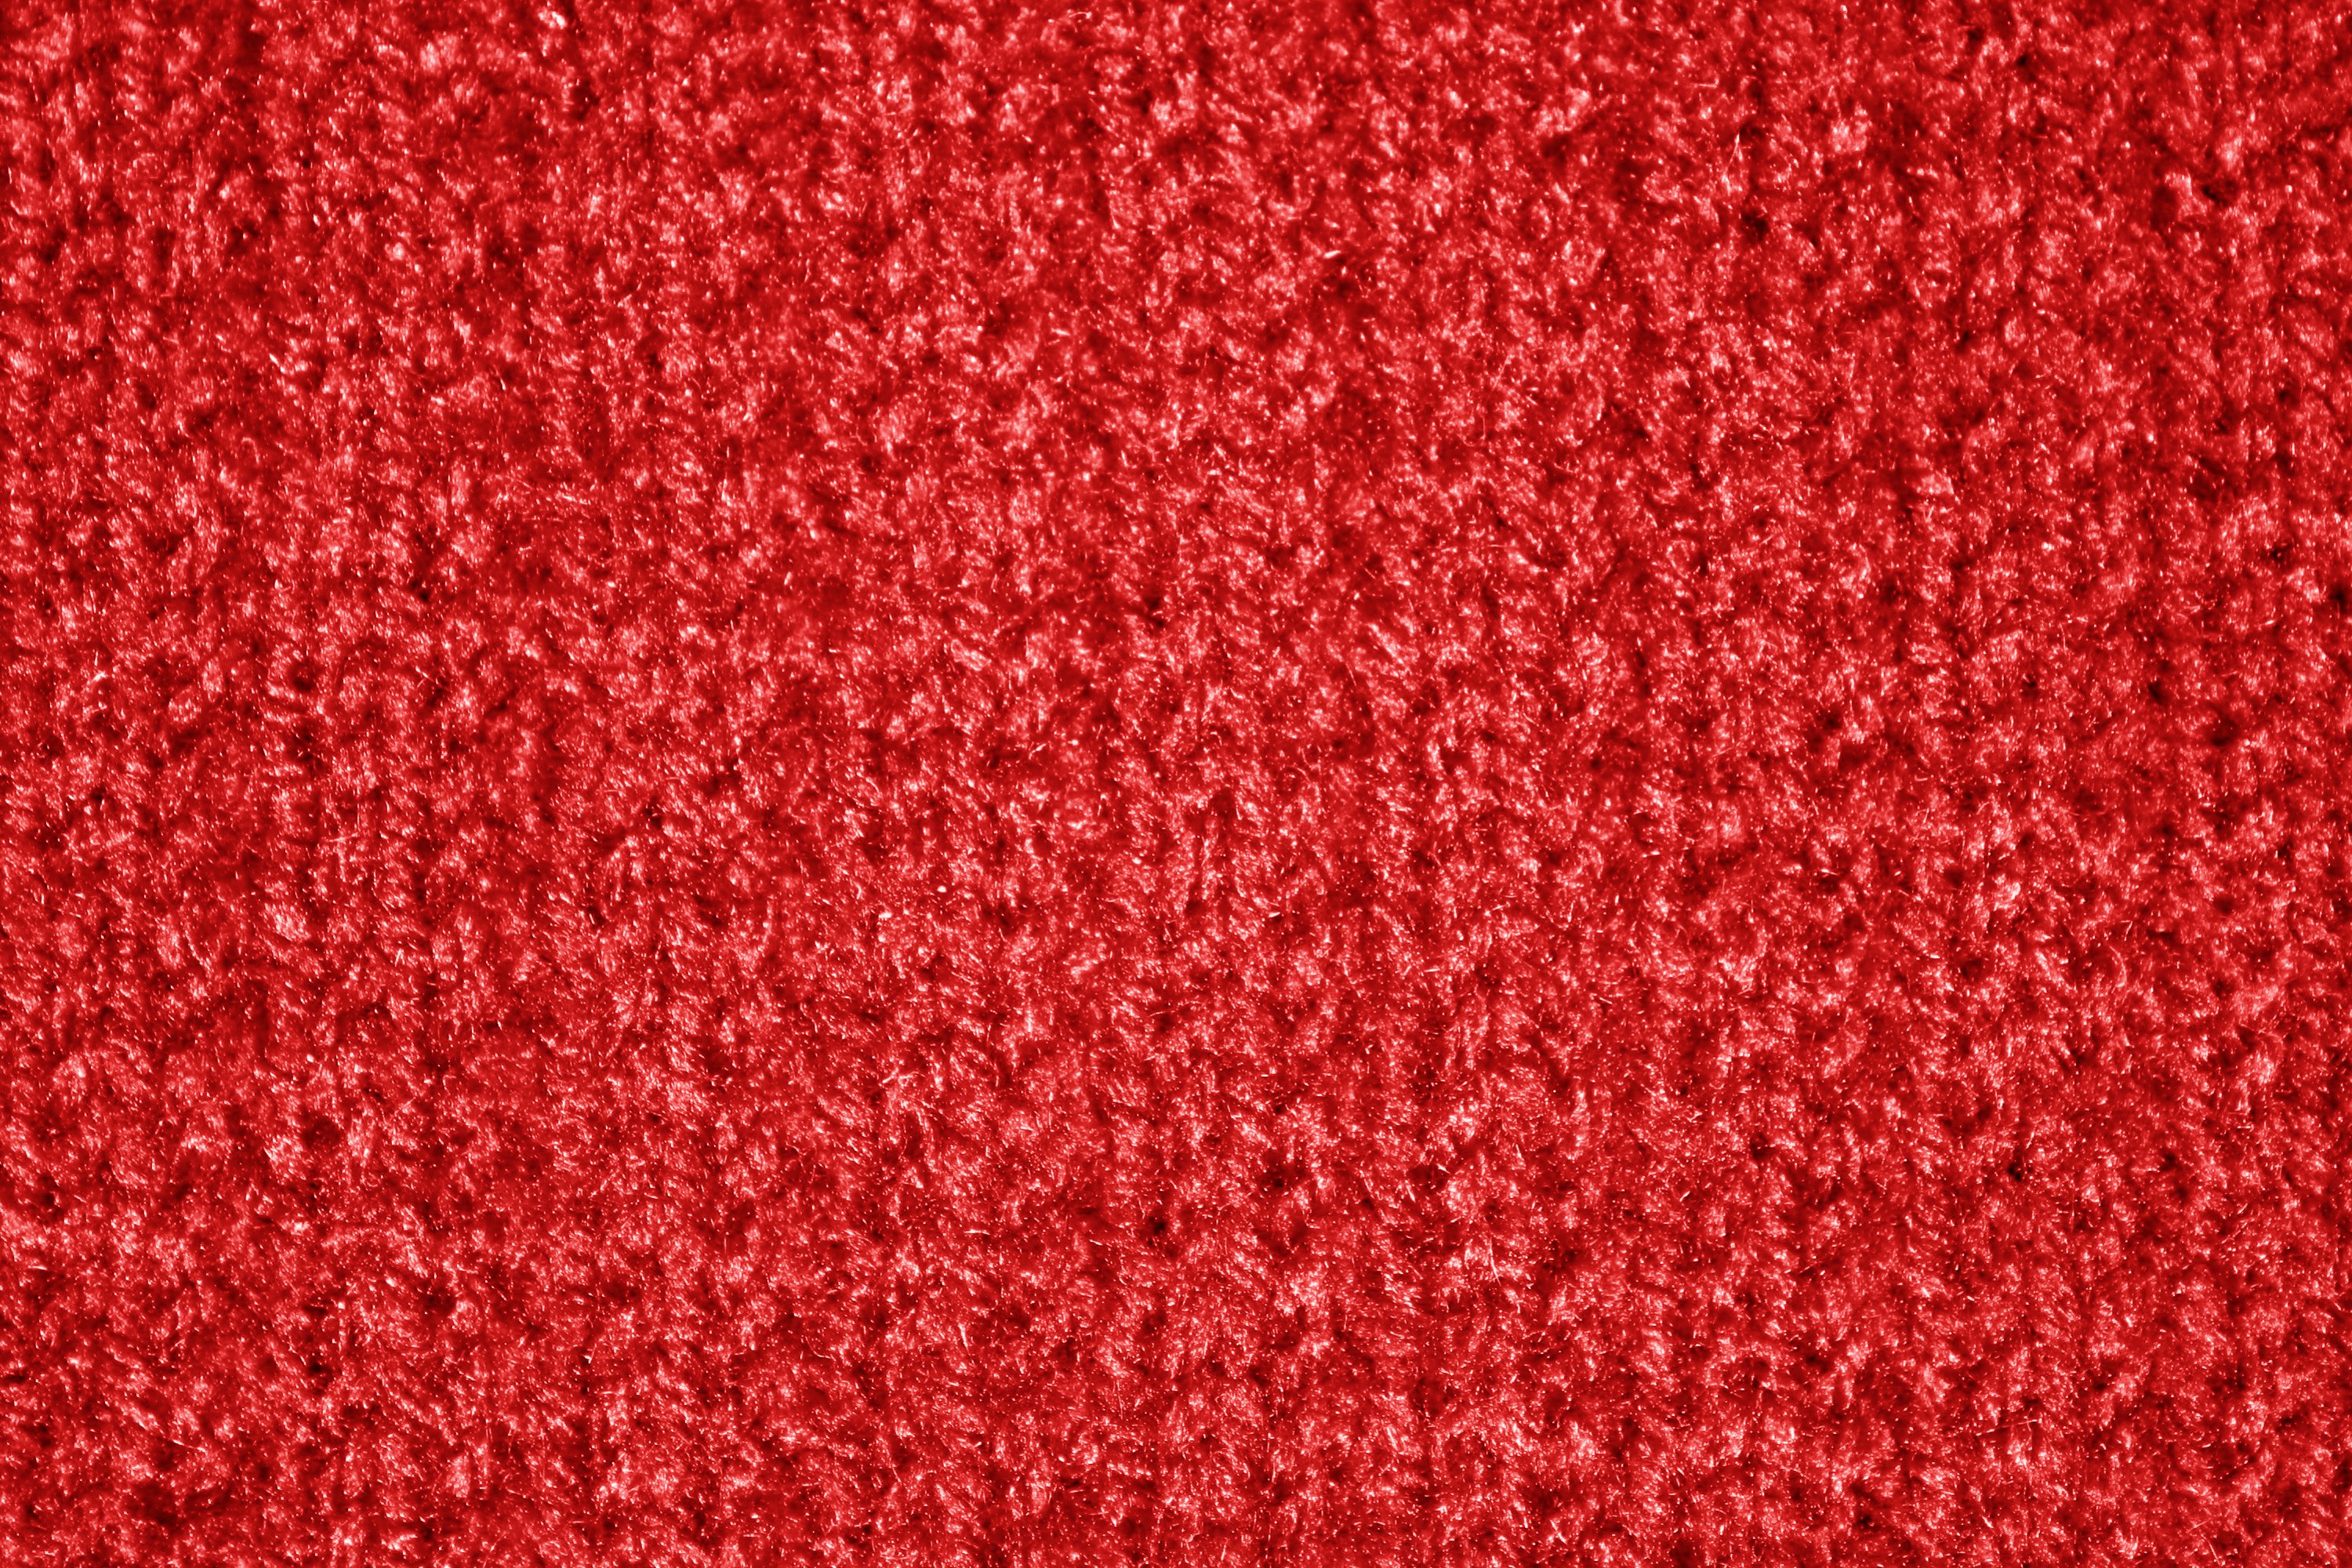 Red Knit Texture Picture | Free Photograph | Photos Public Domain